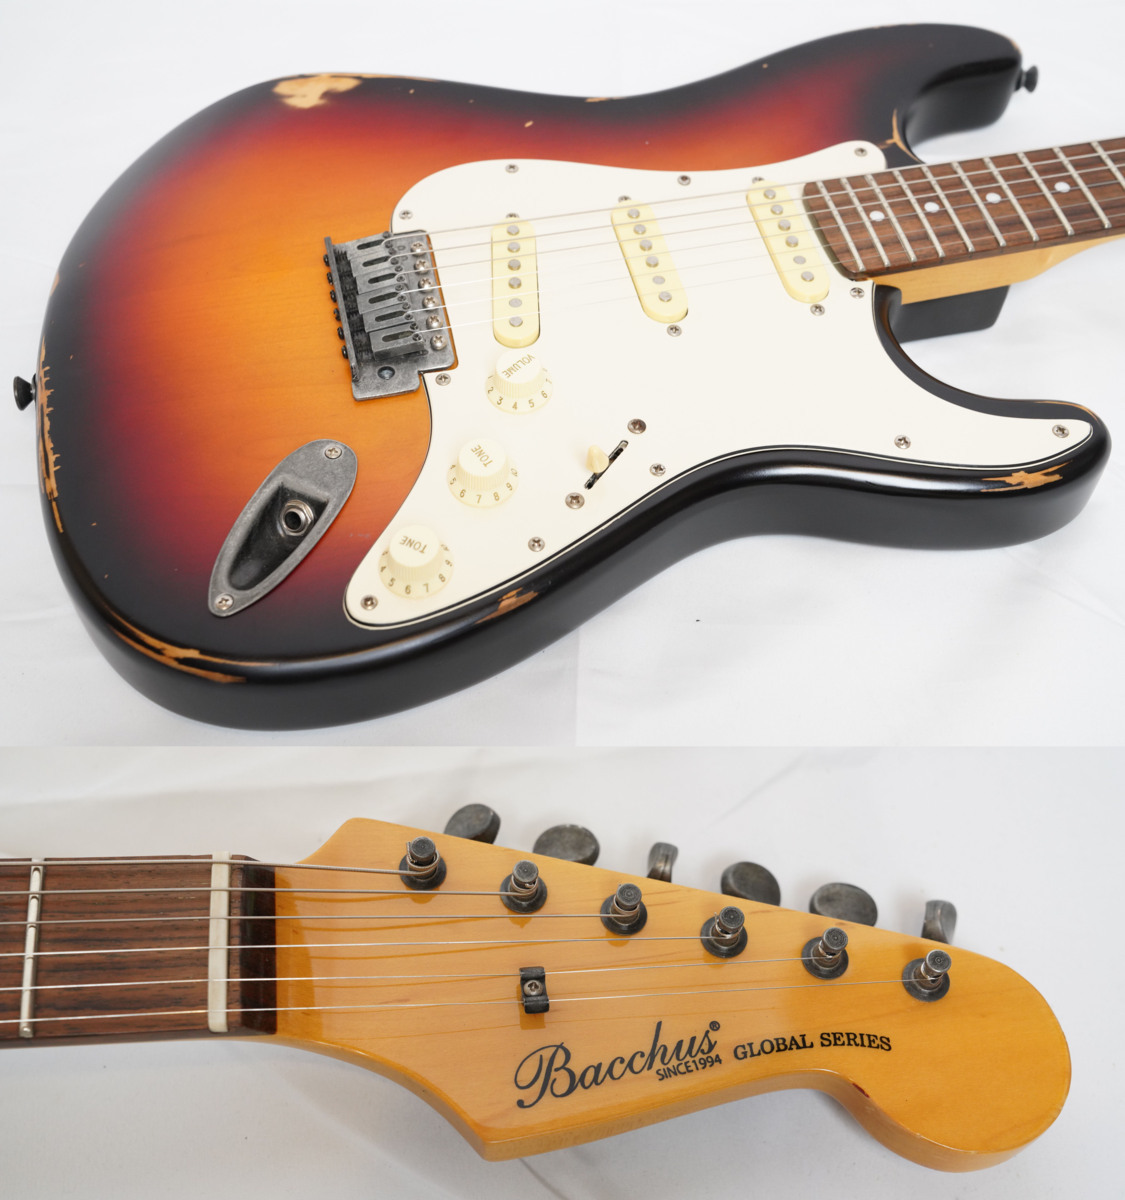 *Bacchus*BST-50RE 3TS твердый реликт specification Fender Stratocaster Bacchus прекрасный товар GLOBAL SERIES*